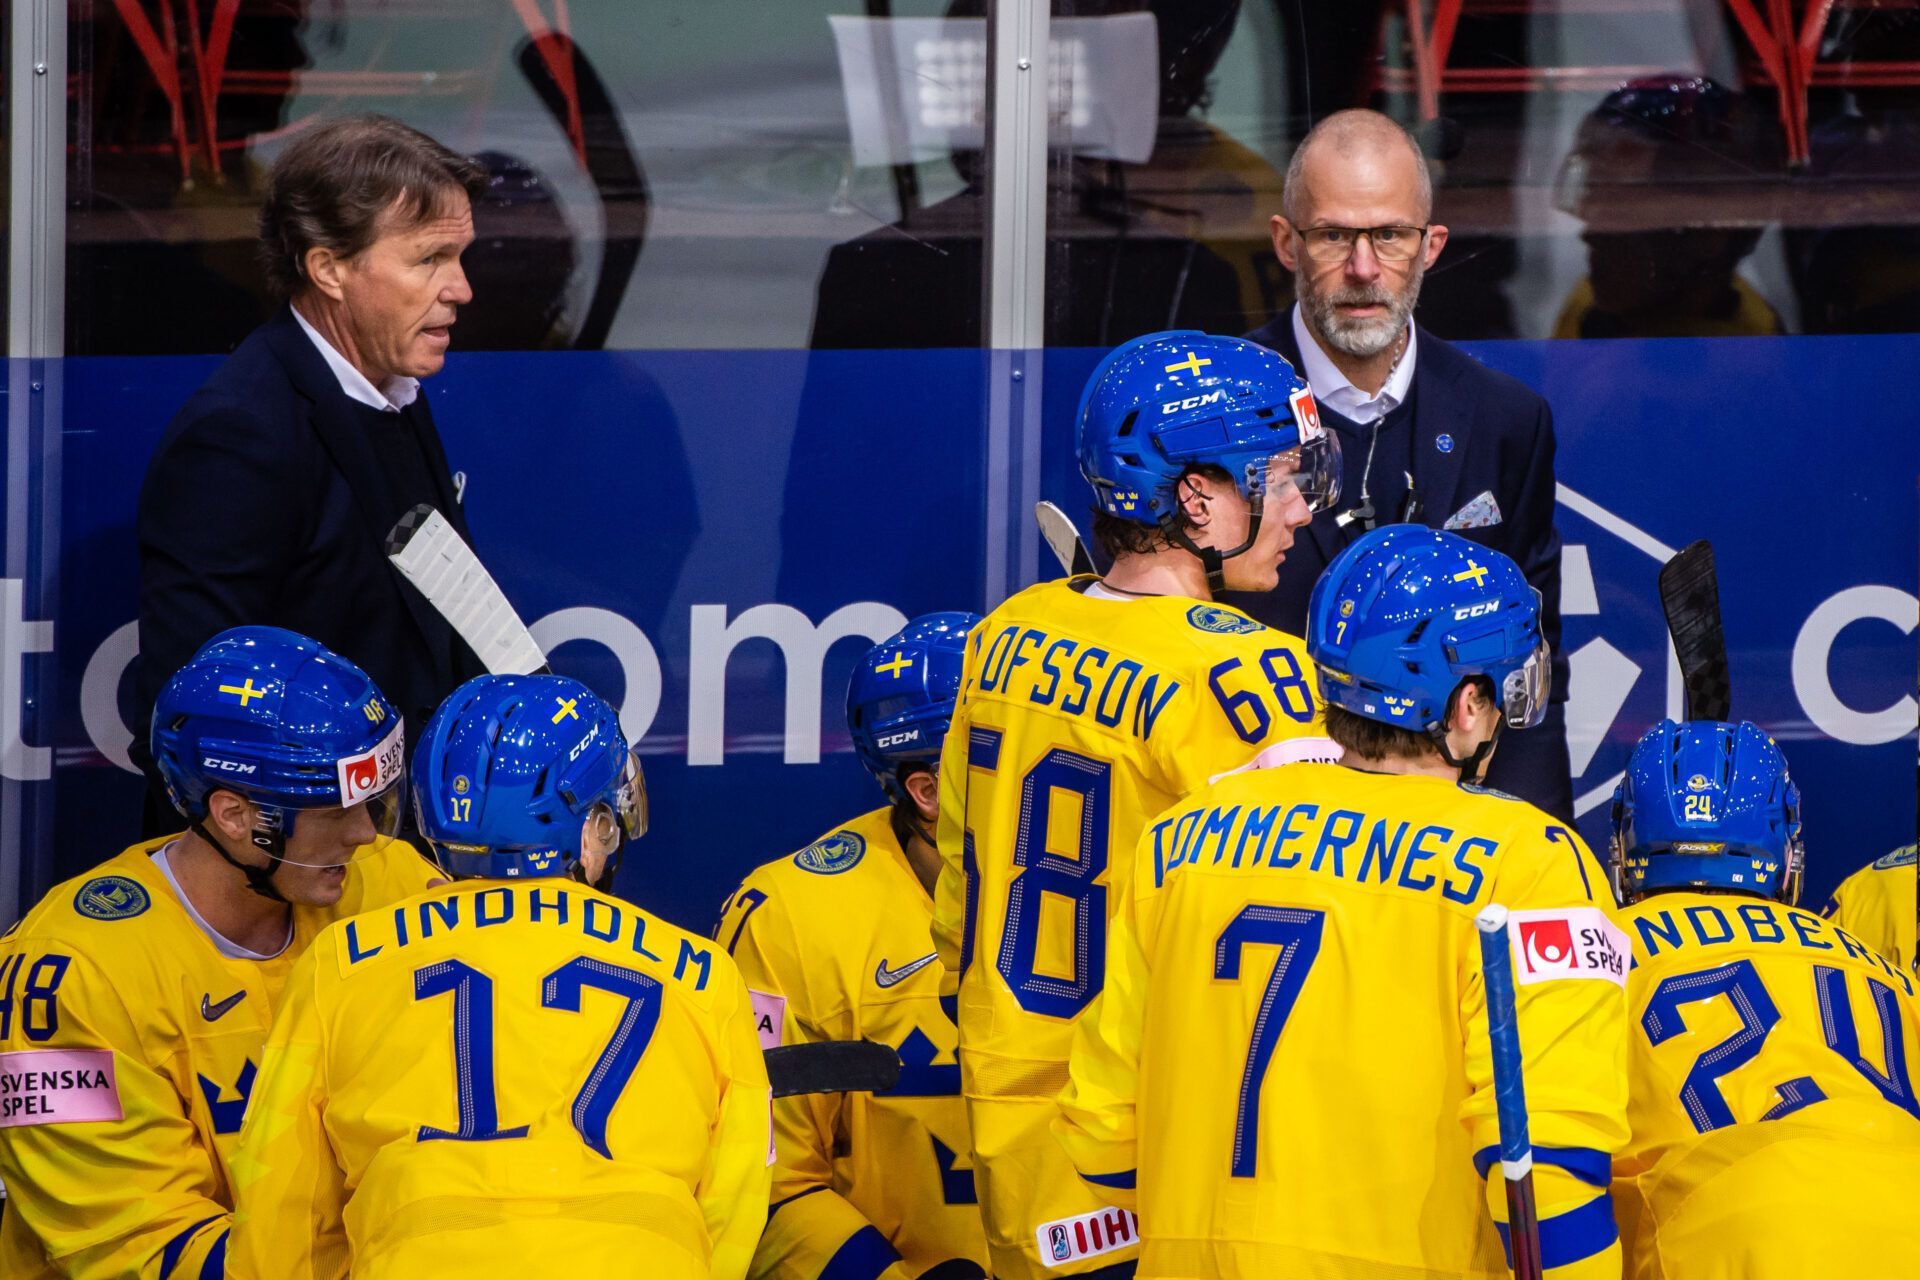 Швеция — Австрия прогноз на матч 14 мая на ЧМ-2022 по хоккею: ставки и коэффициенты на игру